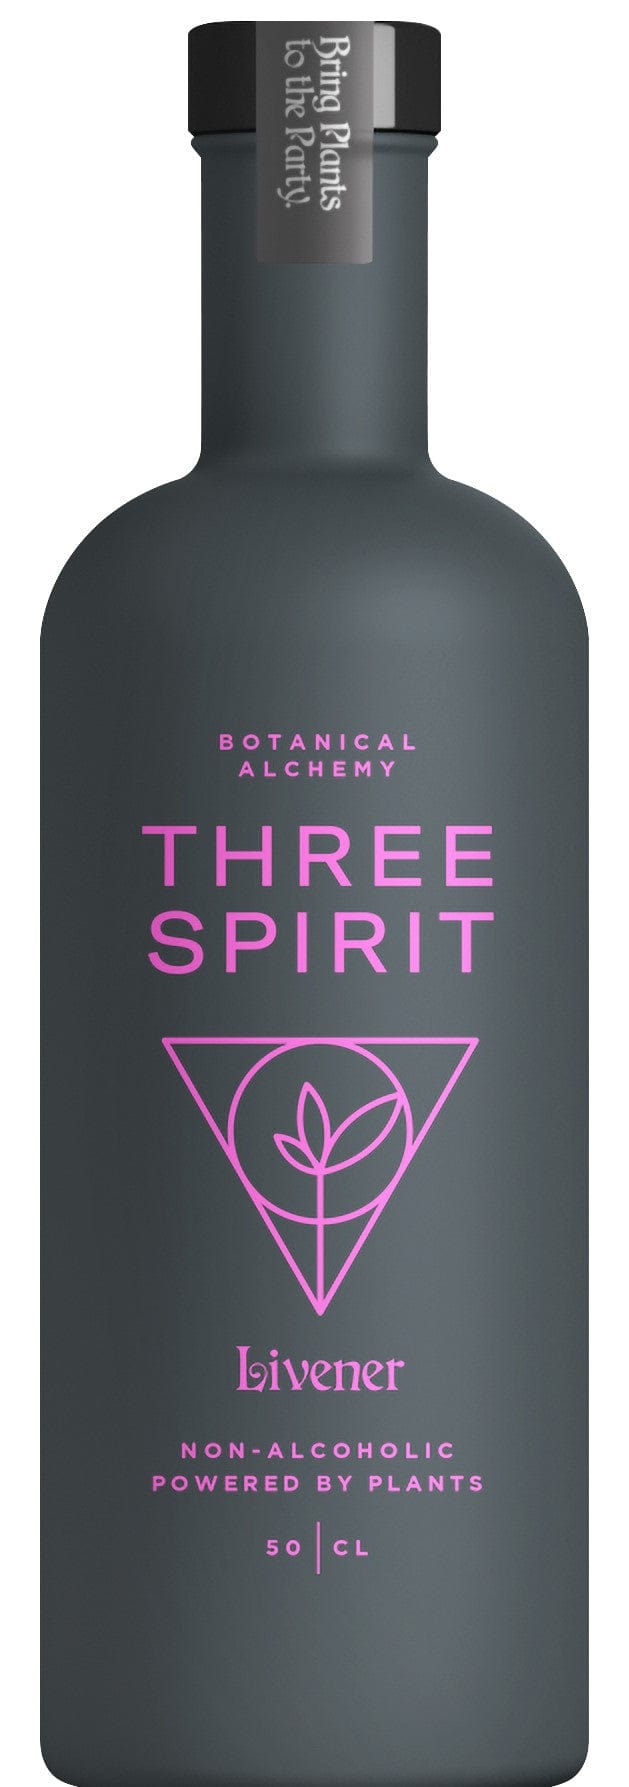 Three Spirit Livener Alcohol Free Spirit 50cl